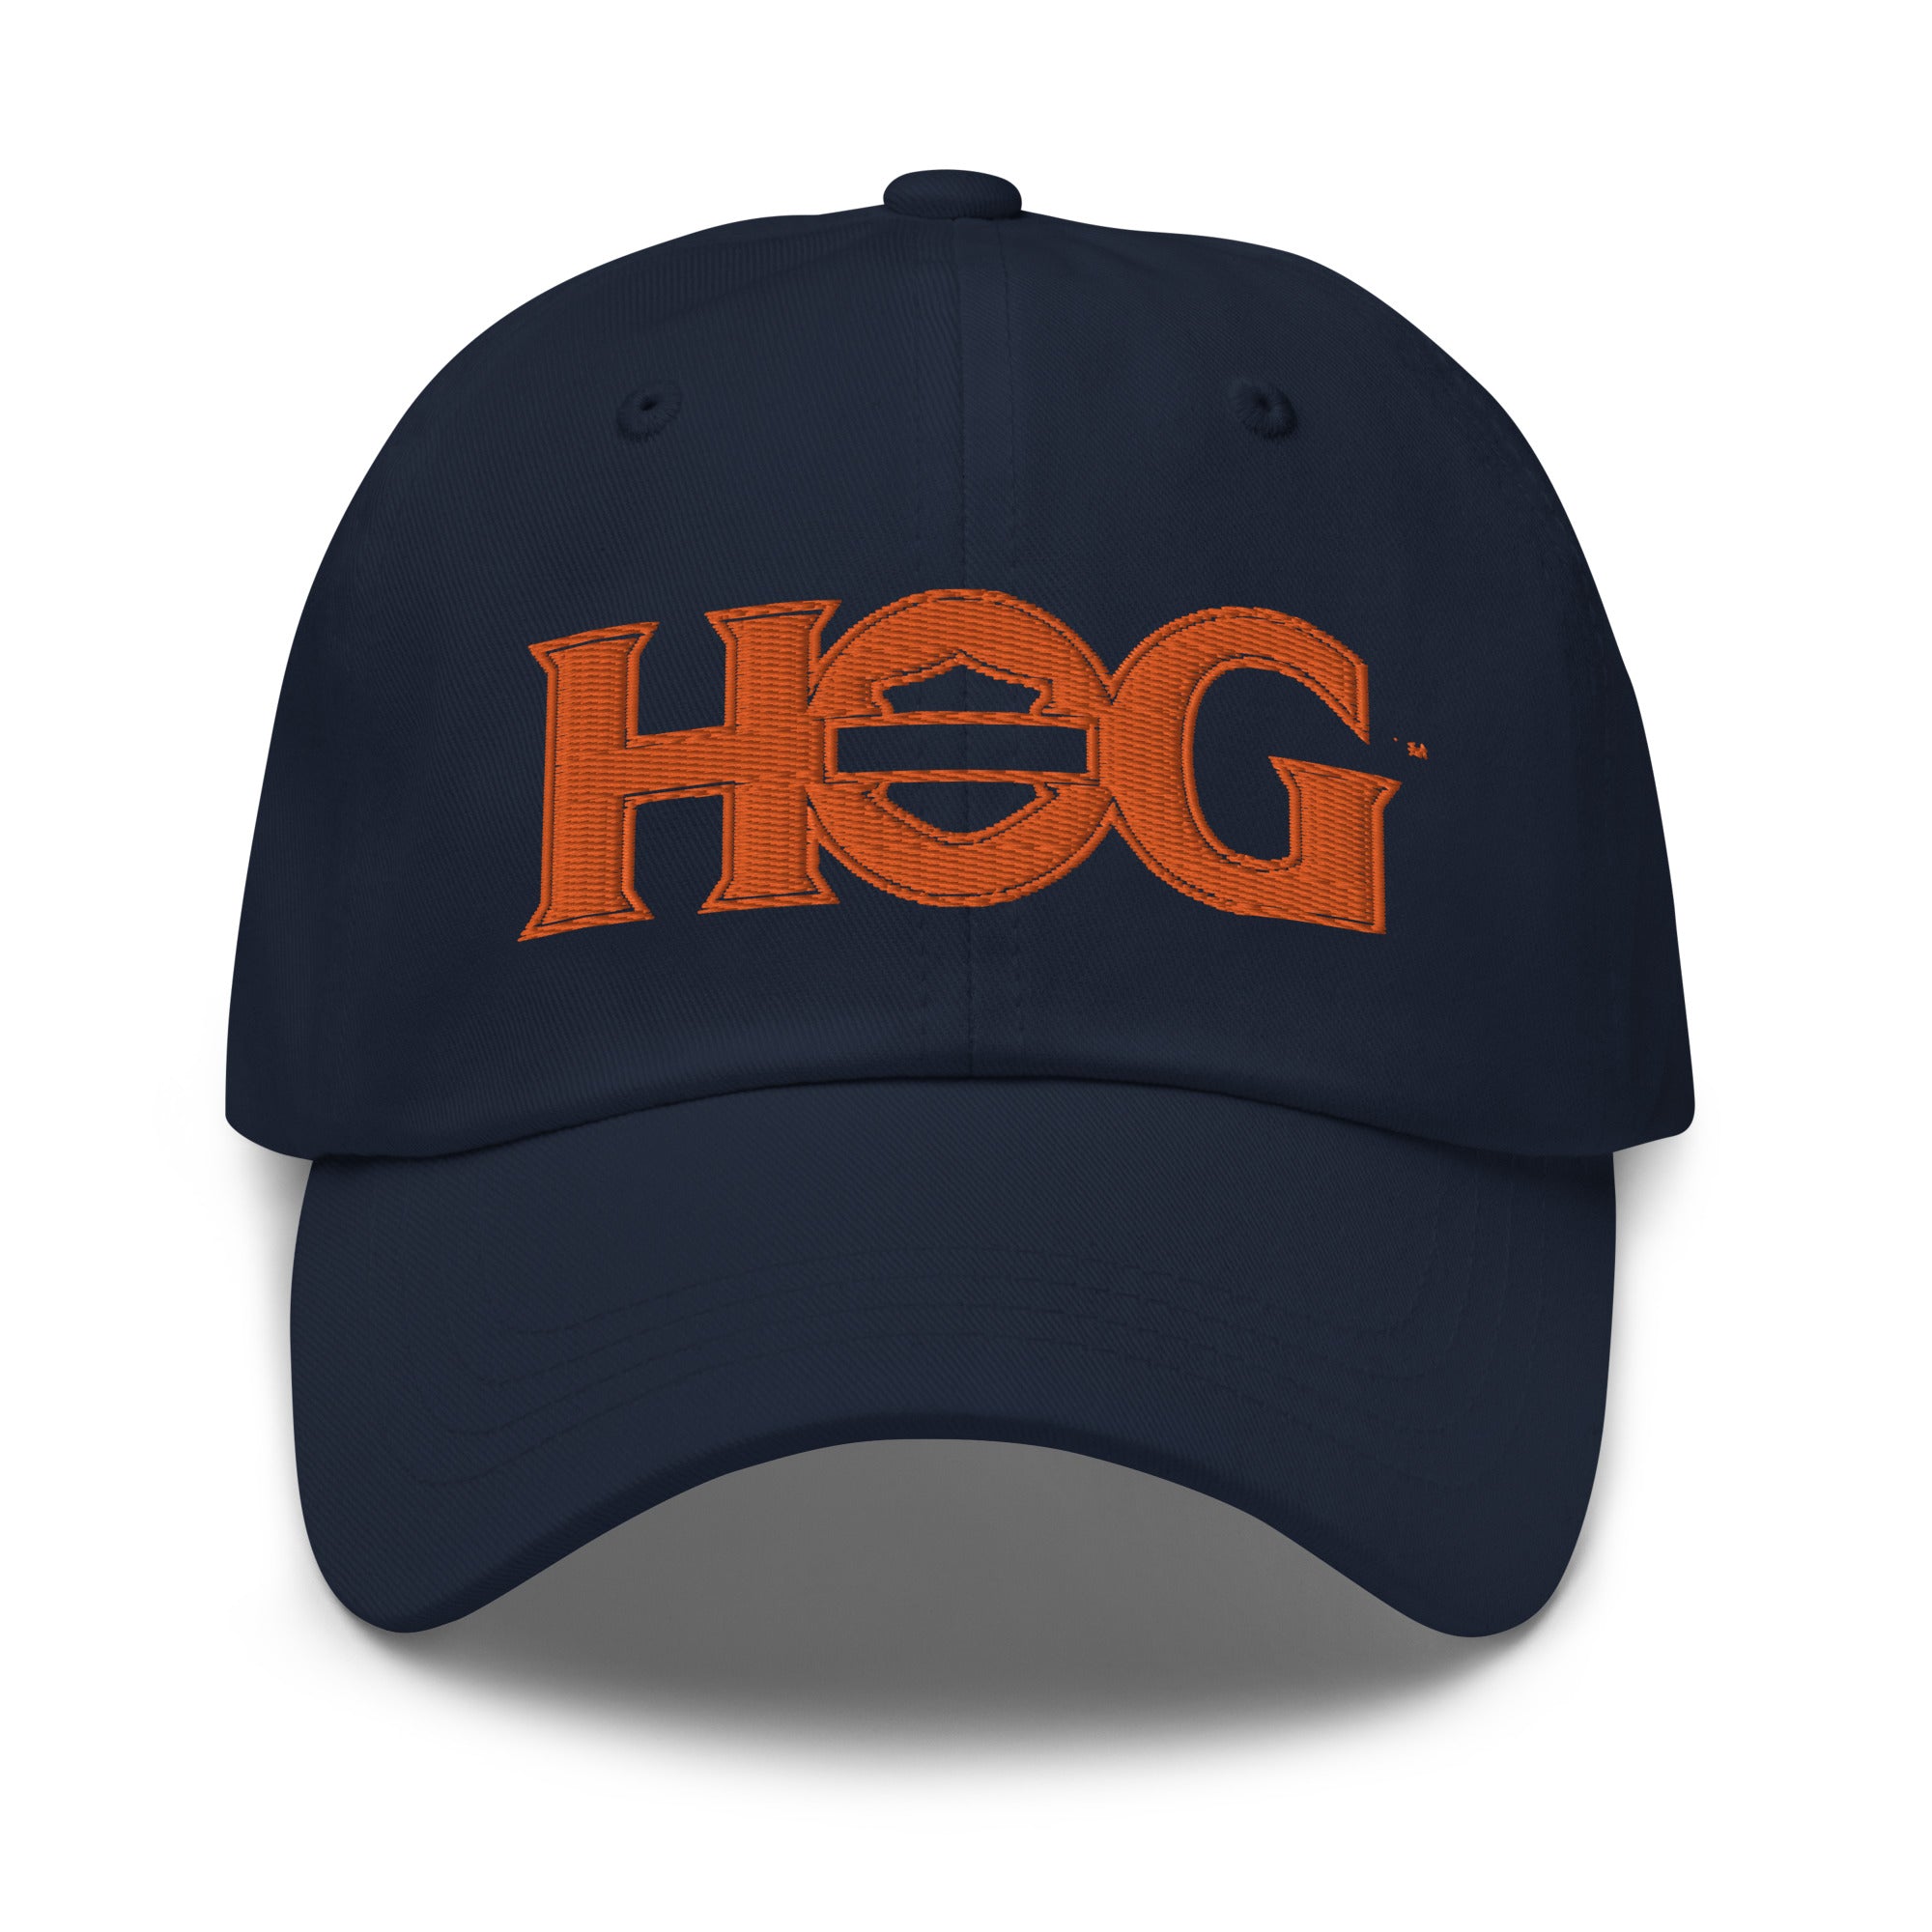 H.O.G. Baseball Caps